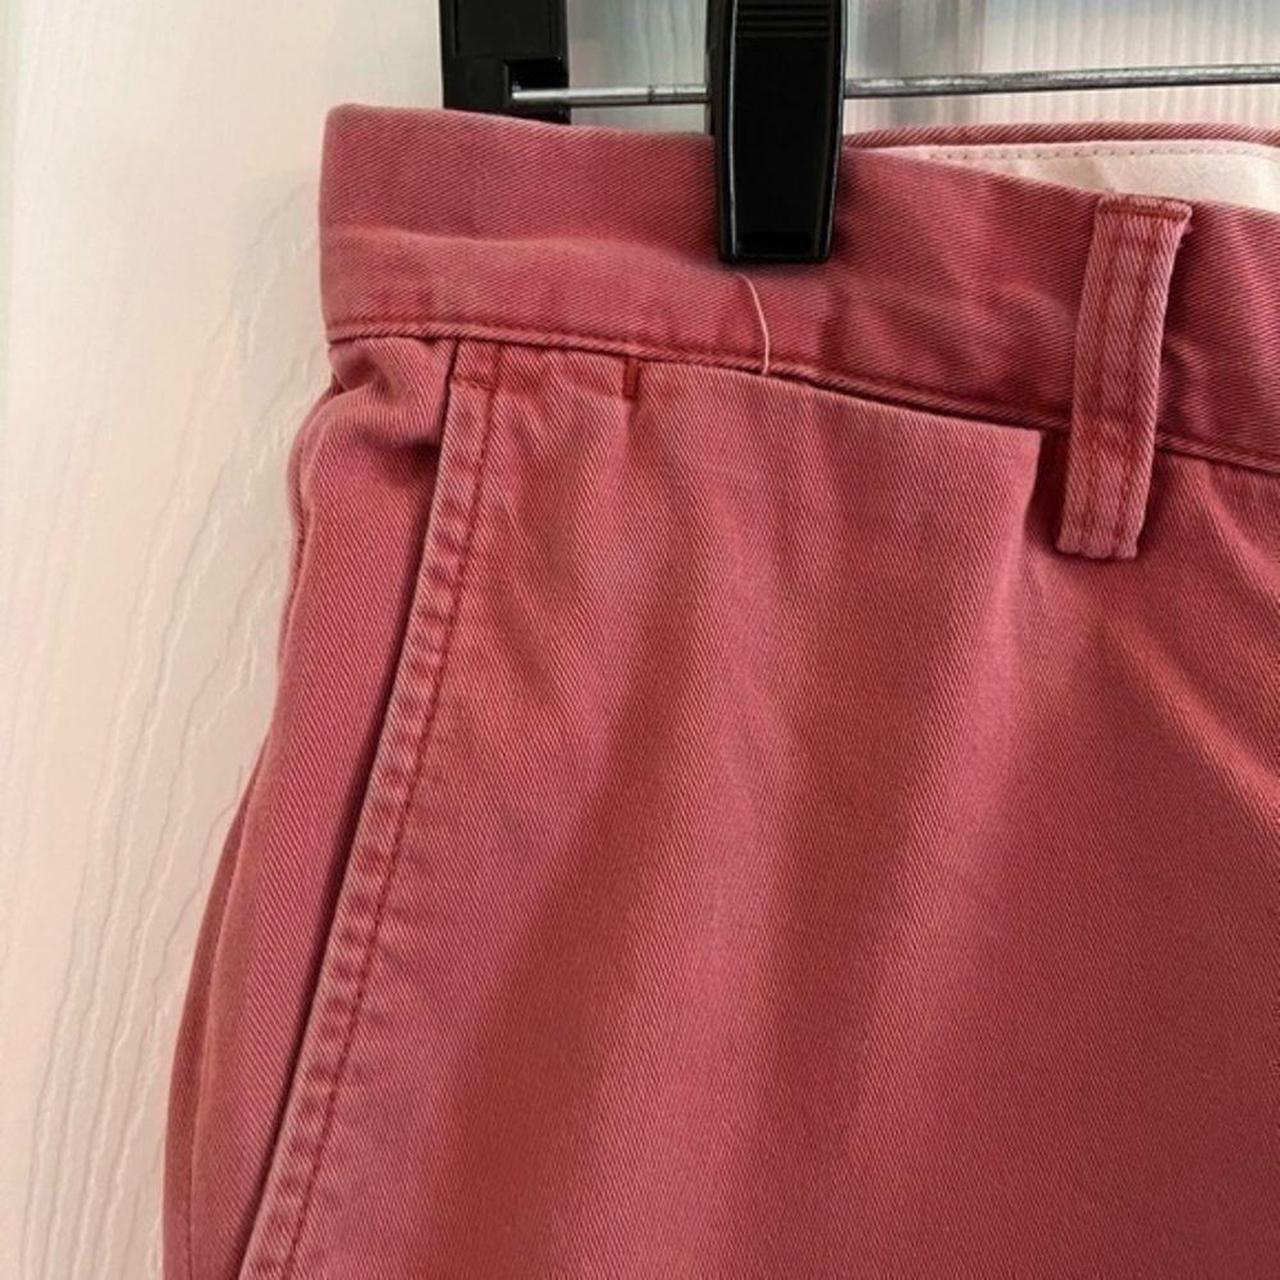 Product Image 3 - Ralph Lauren Polo Pants. Great